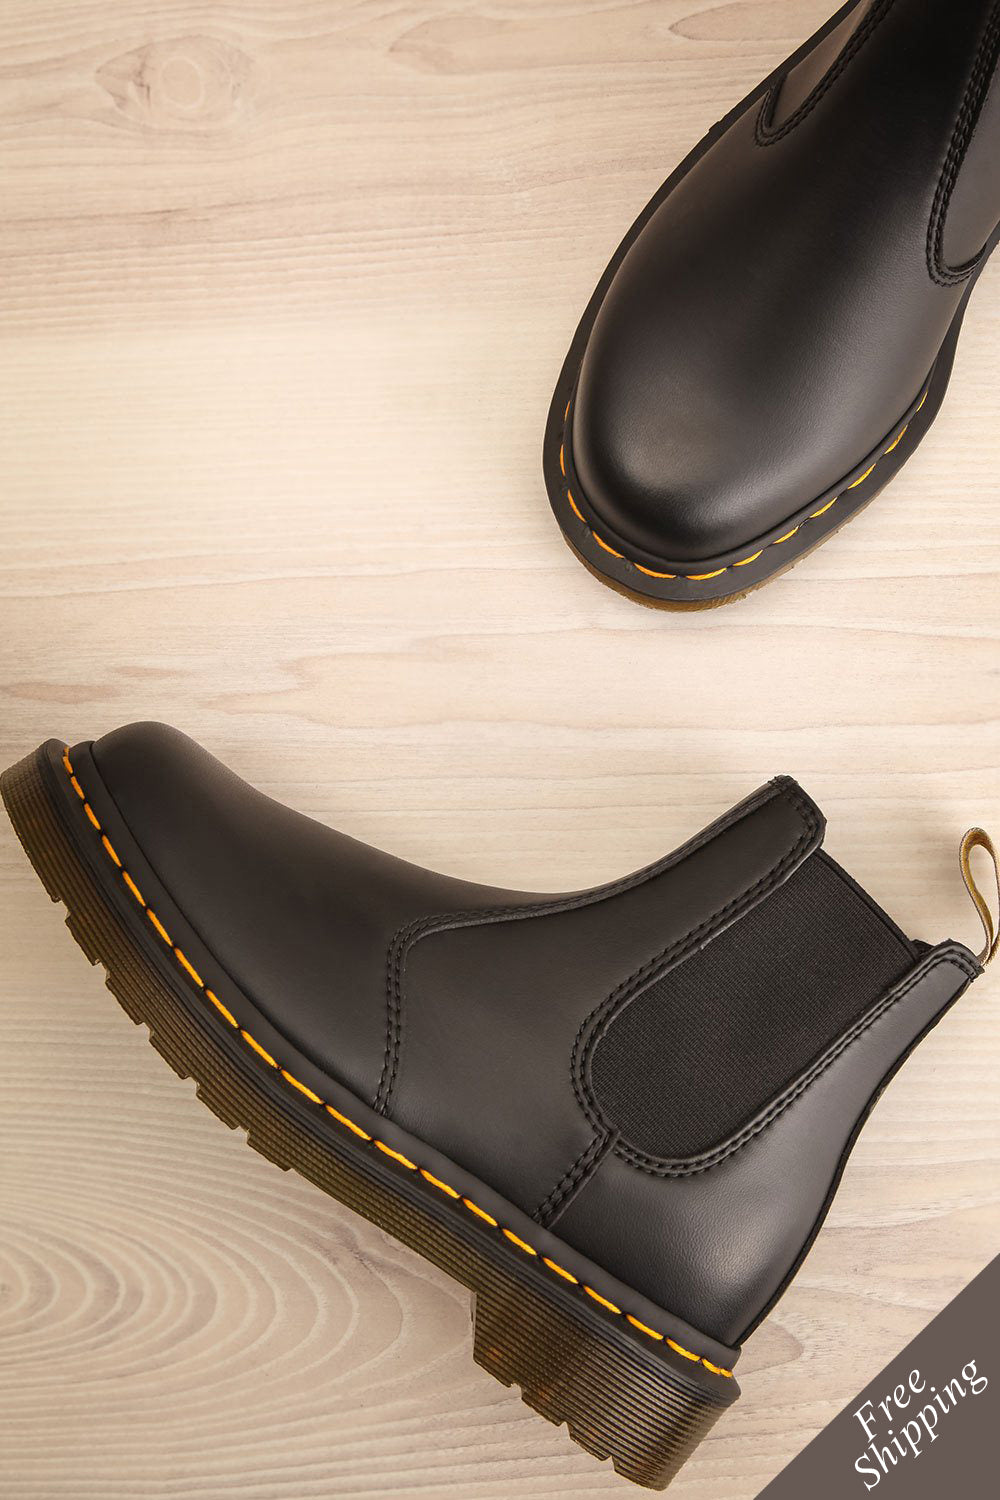 vegan leather chelsea boots